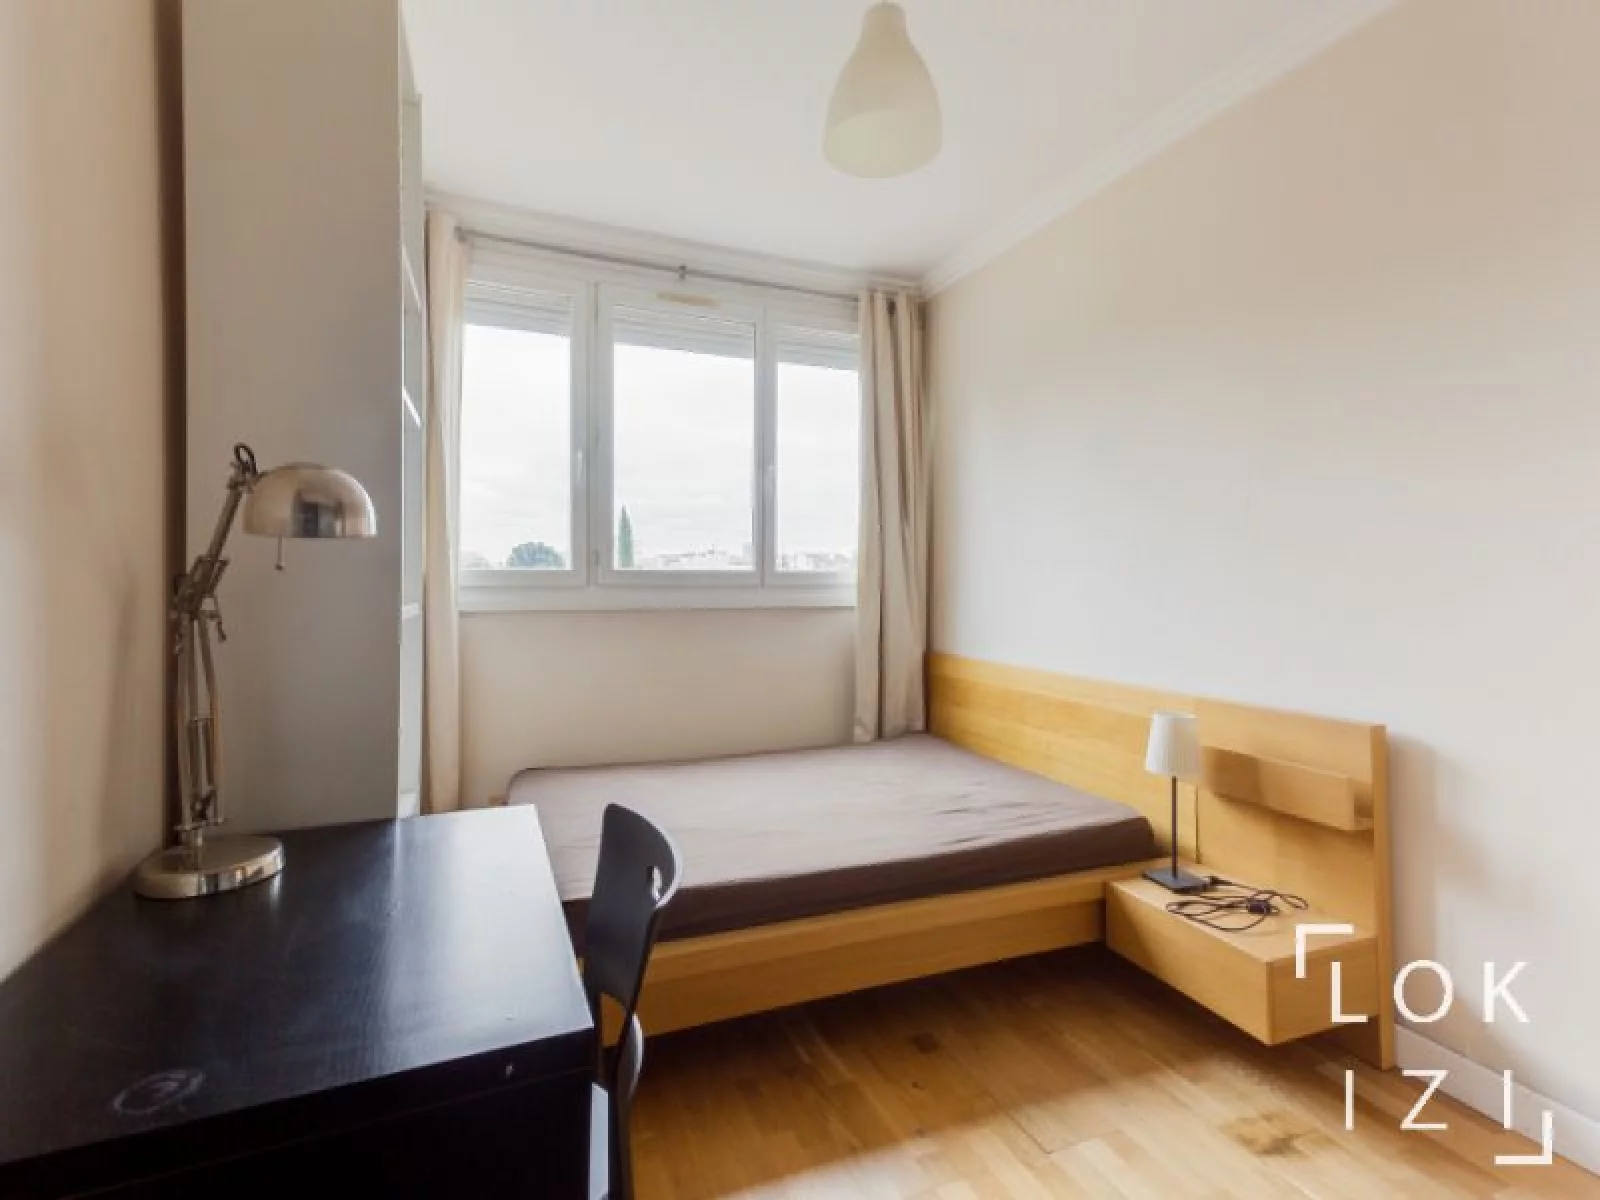 Location appartement meubl 5 pices 82m (Toulouse)